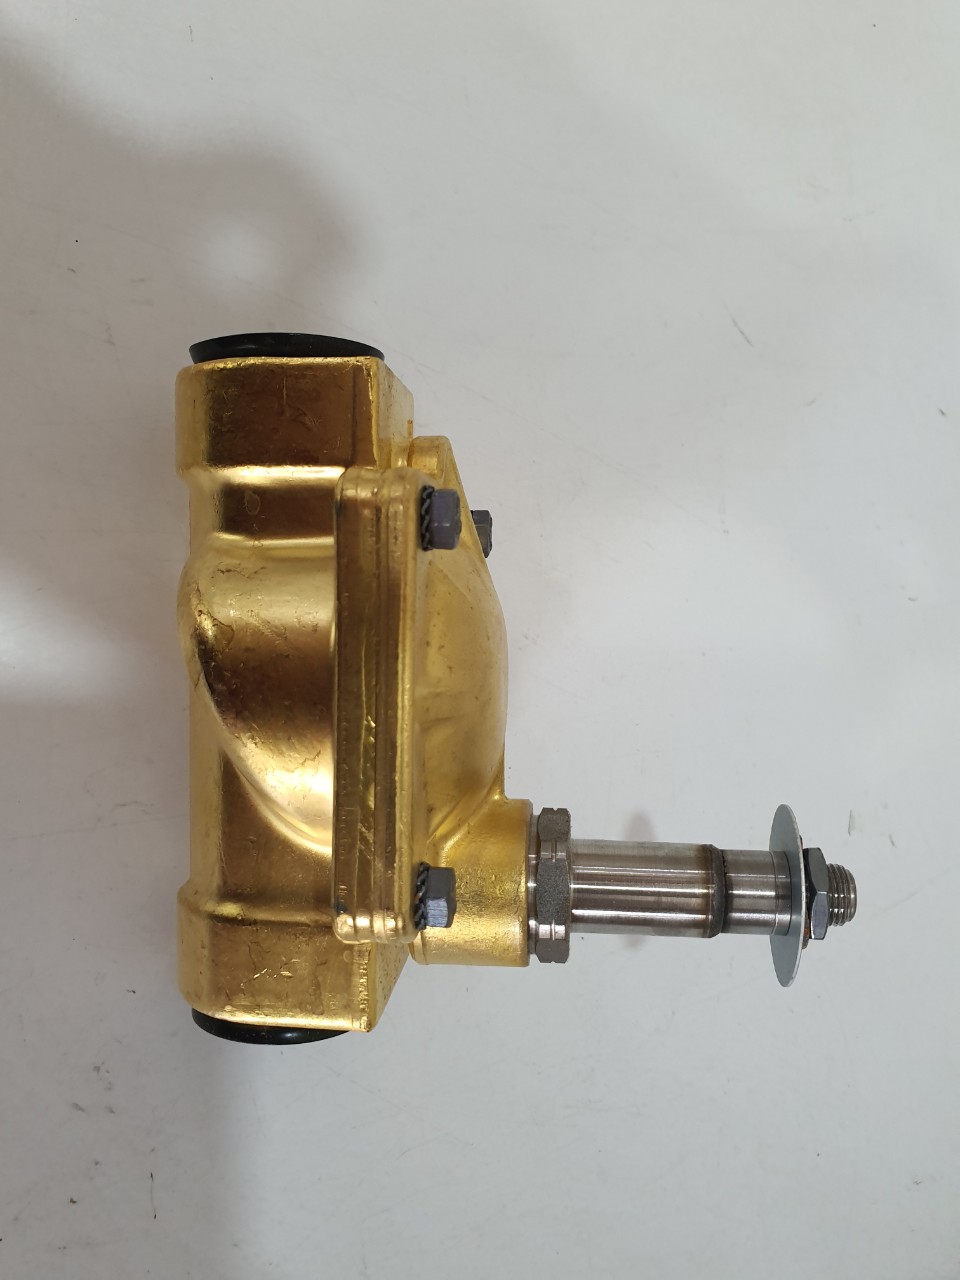 7321bcn90 parker valve